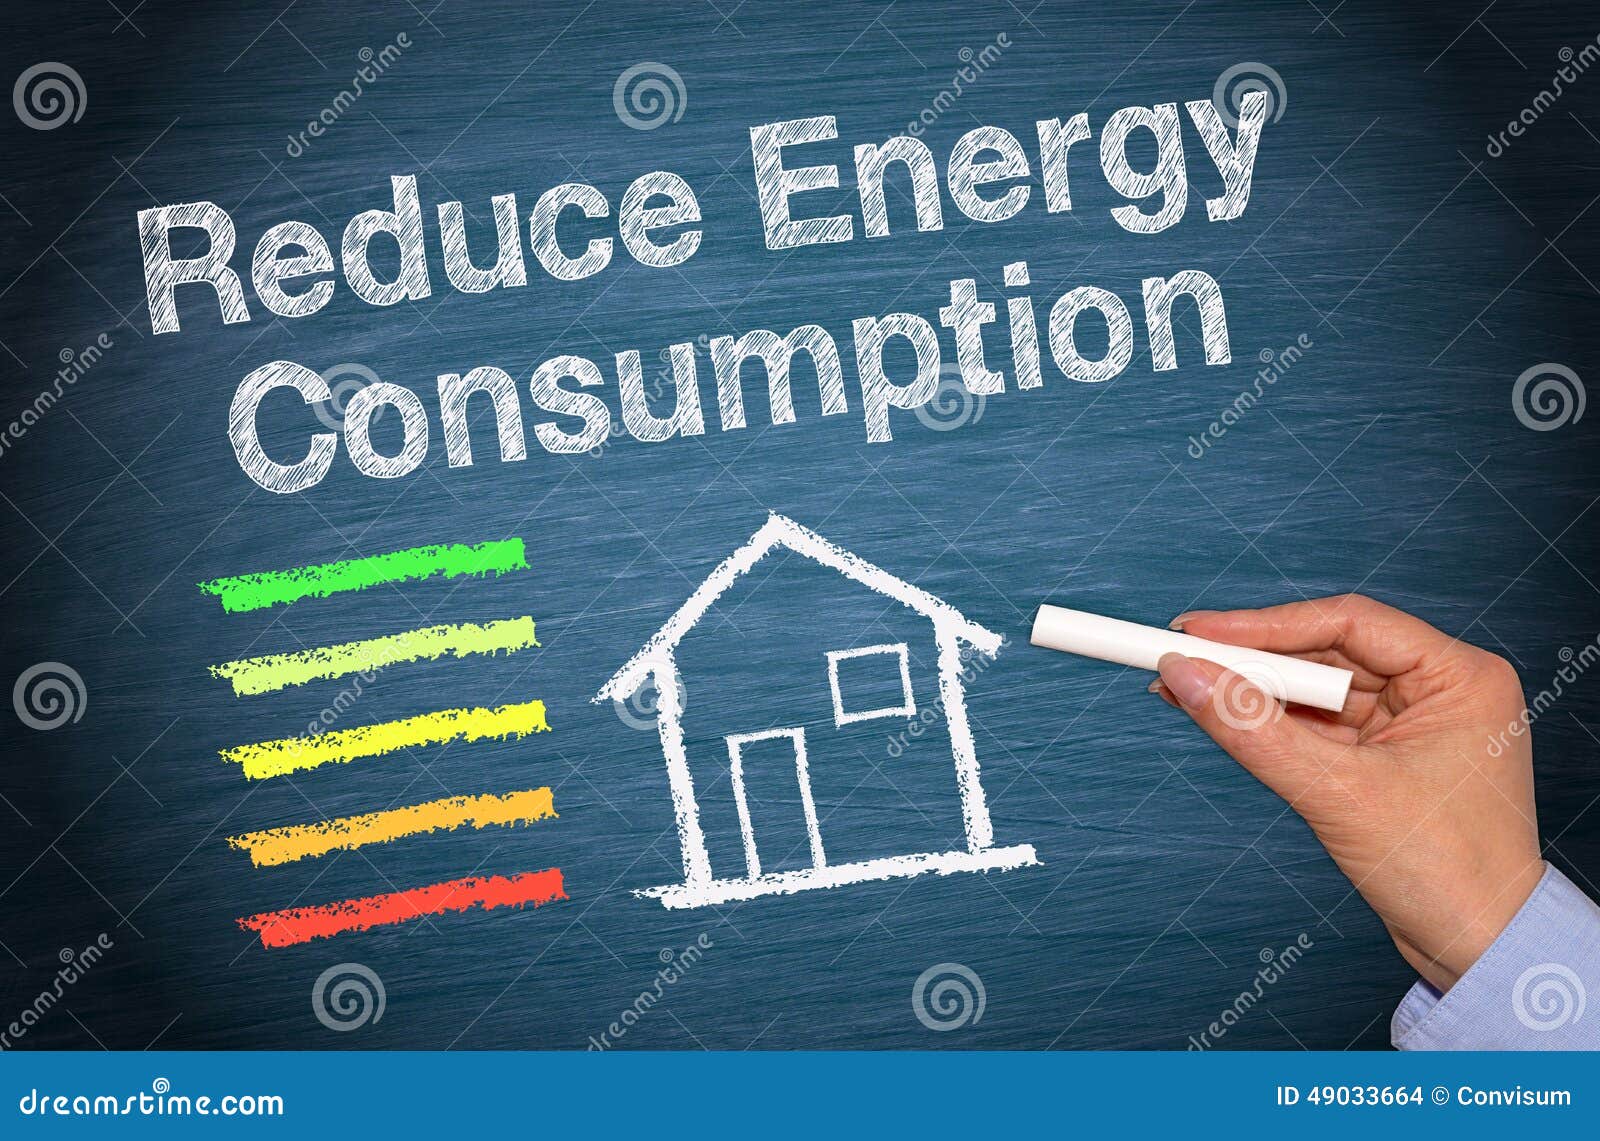 reduce energy consumption